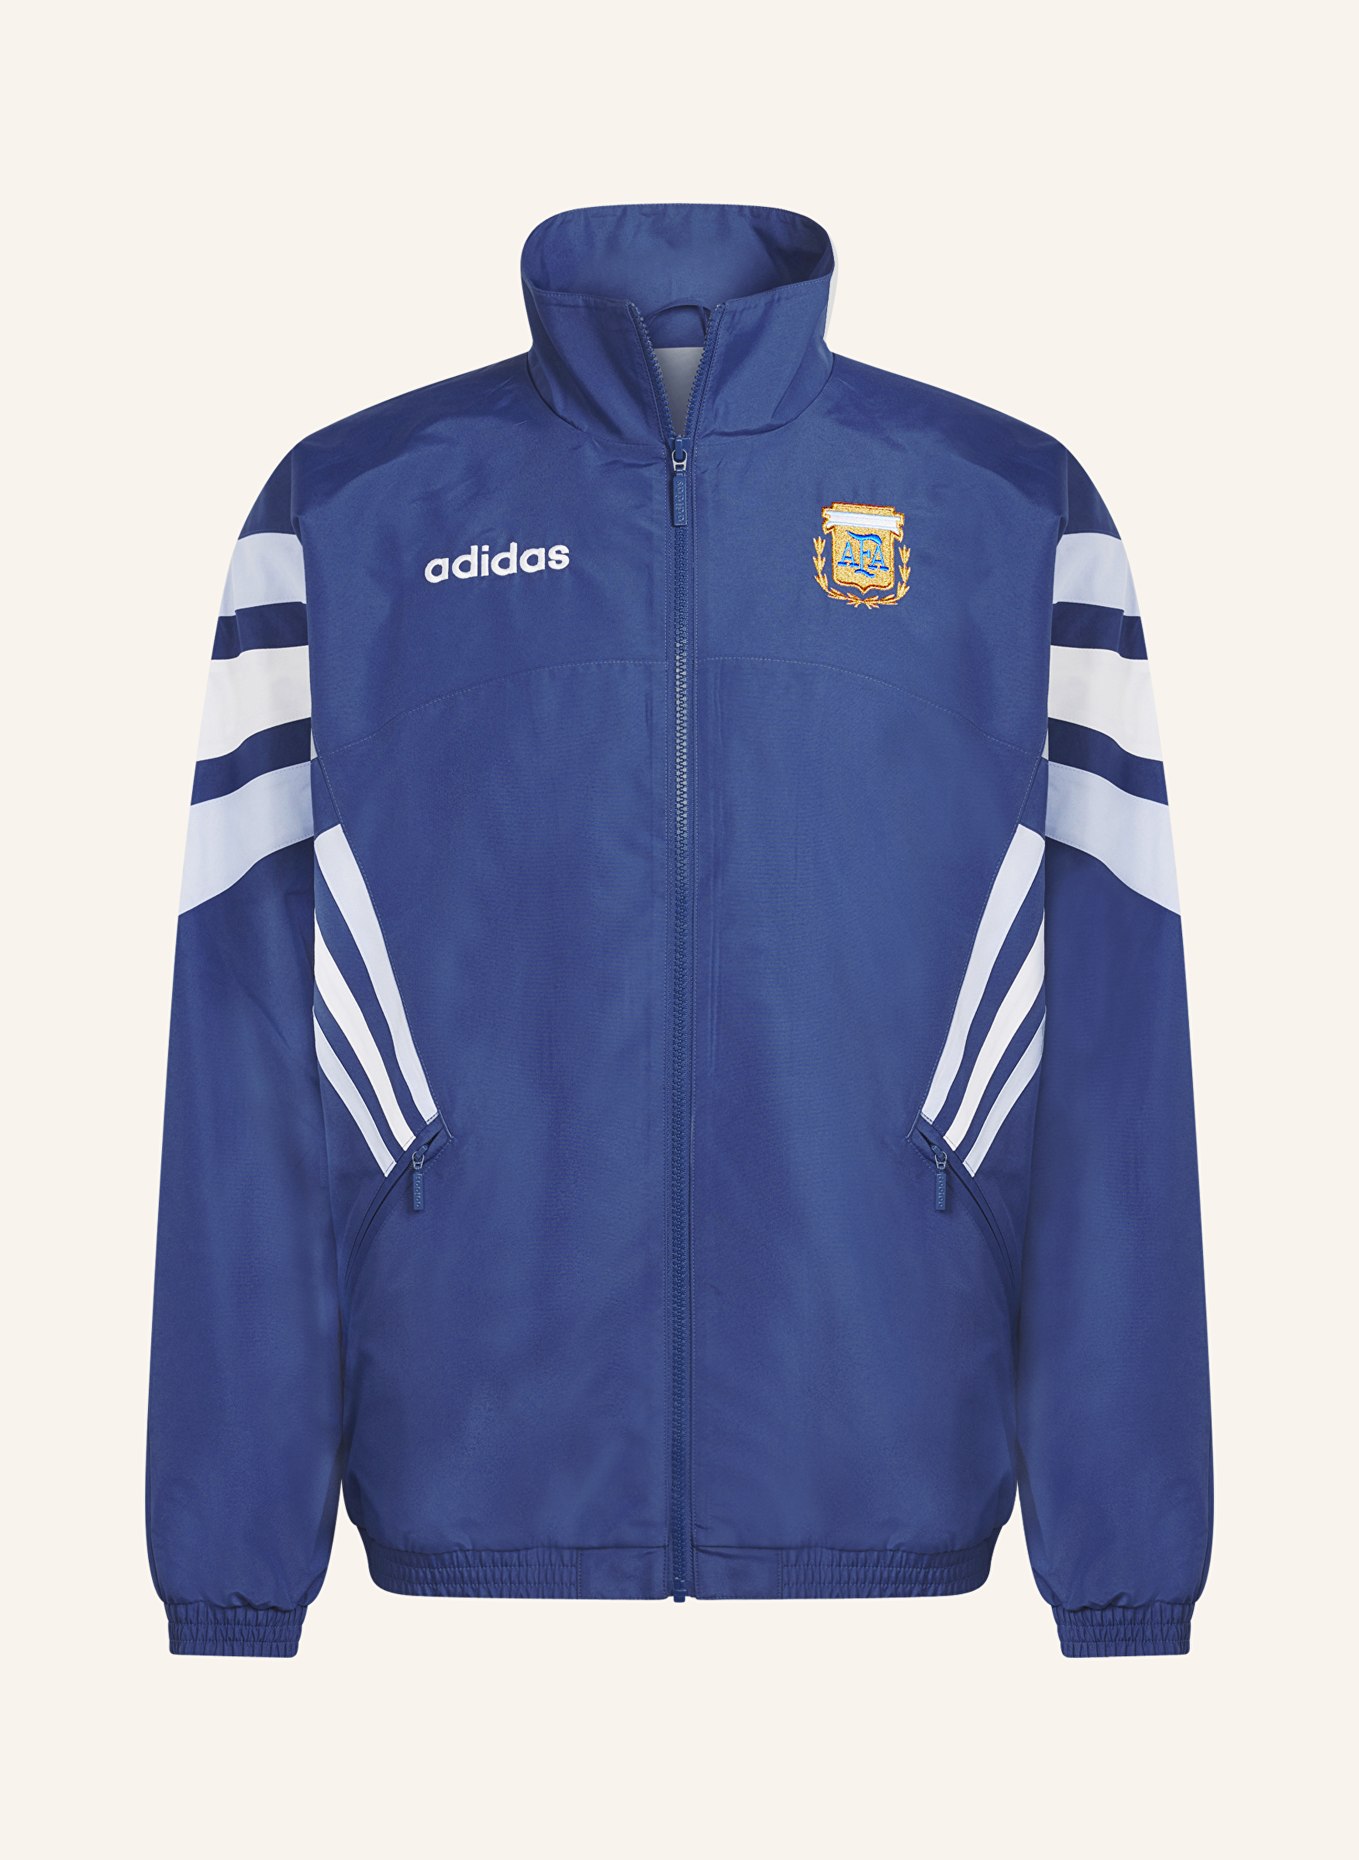 adidas Originals Trainingsjacke ARGENTINIEN 1994, Farbe: BLAU/ HELLBLAU (Bild 1)